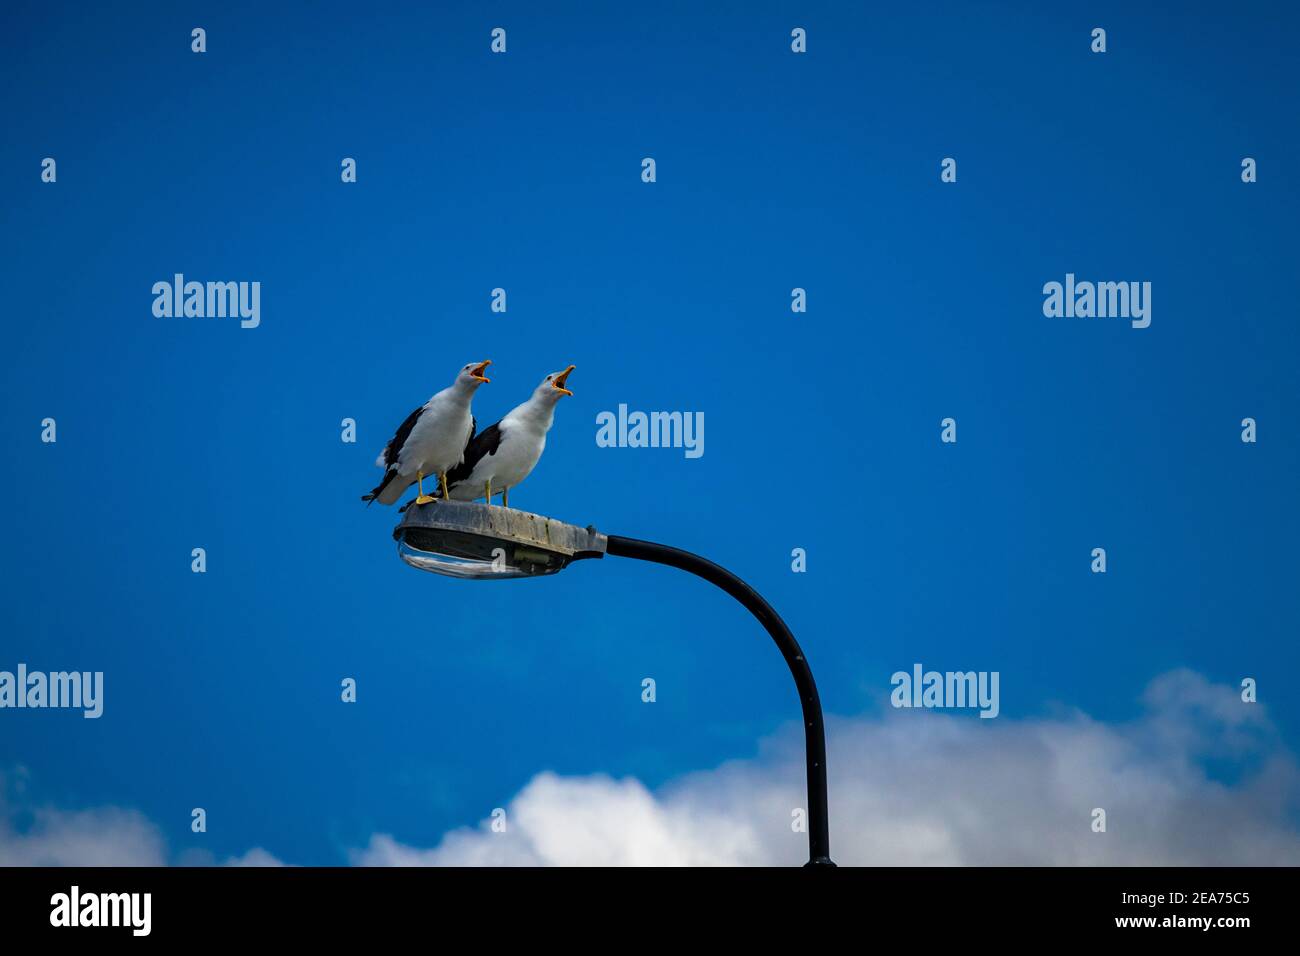 Gulls screeching on top of a lantern Stock Photo